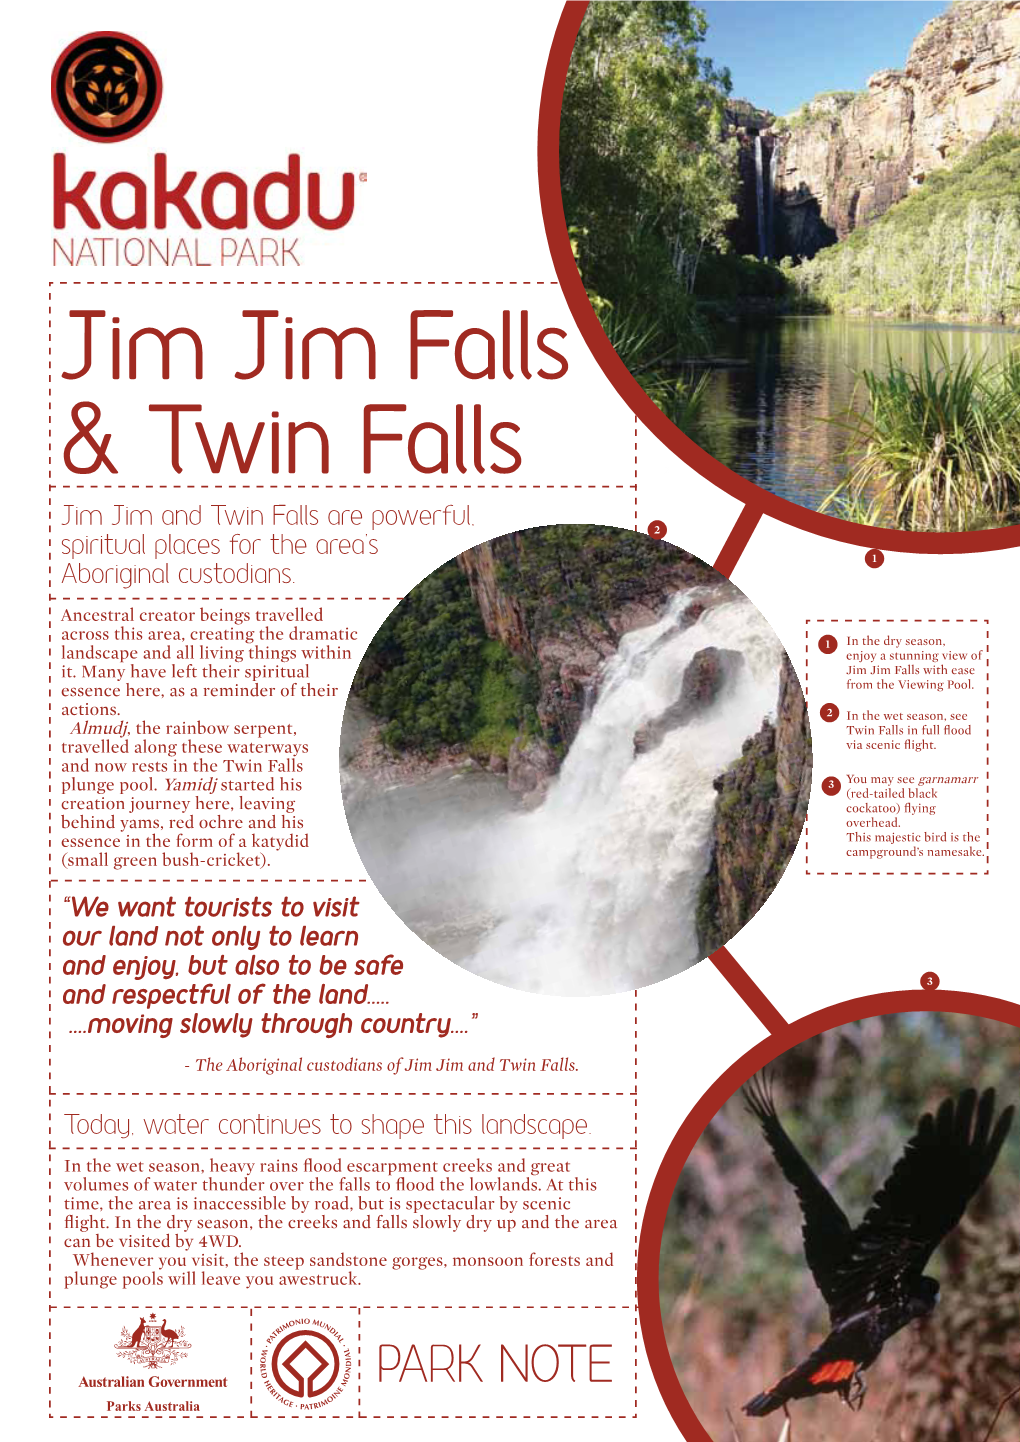 Jim Jim Falls & Twin Falls